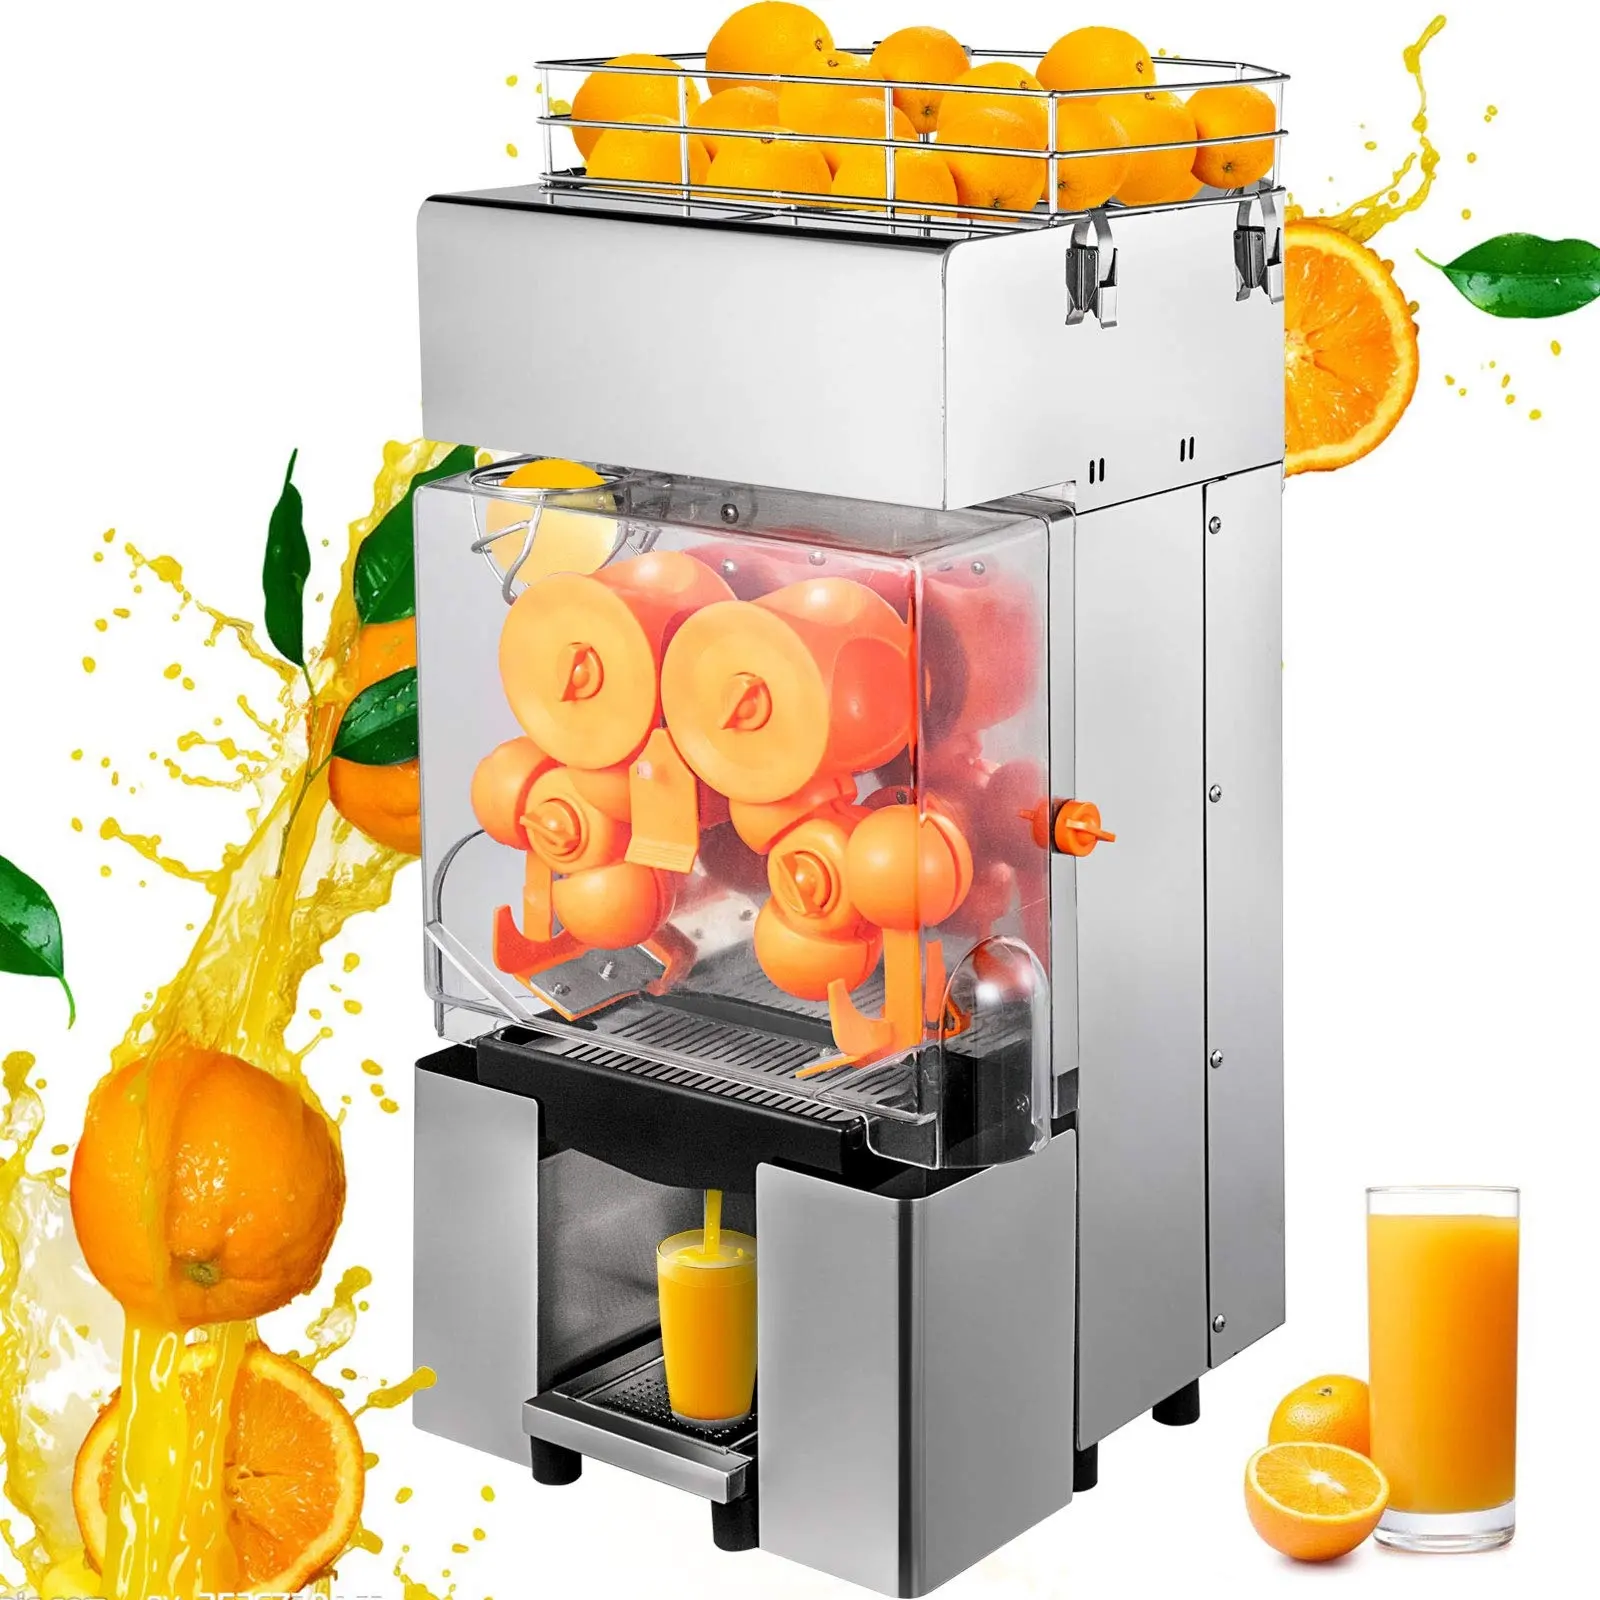 Supertise Commercial Professional Industrial Counter Top Automatic Orange Lemon Squeezer Orange Juicer Juice Extractor Machine